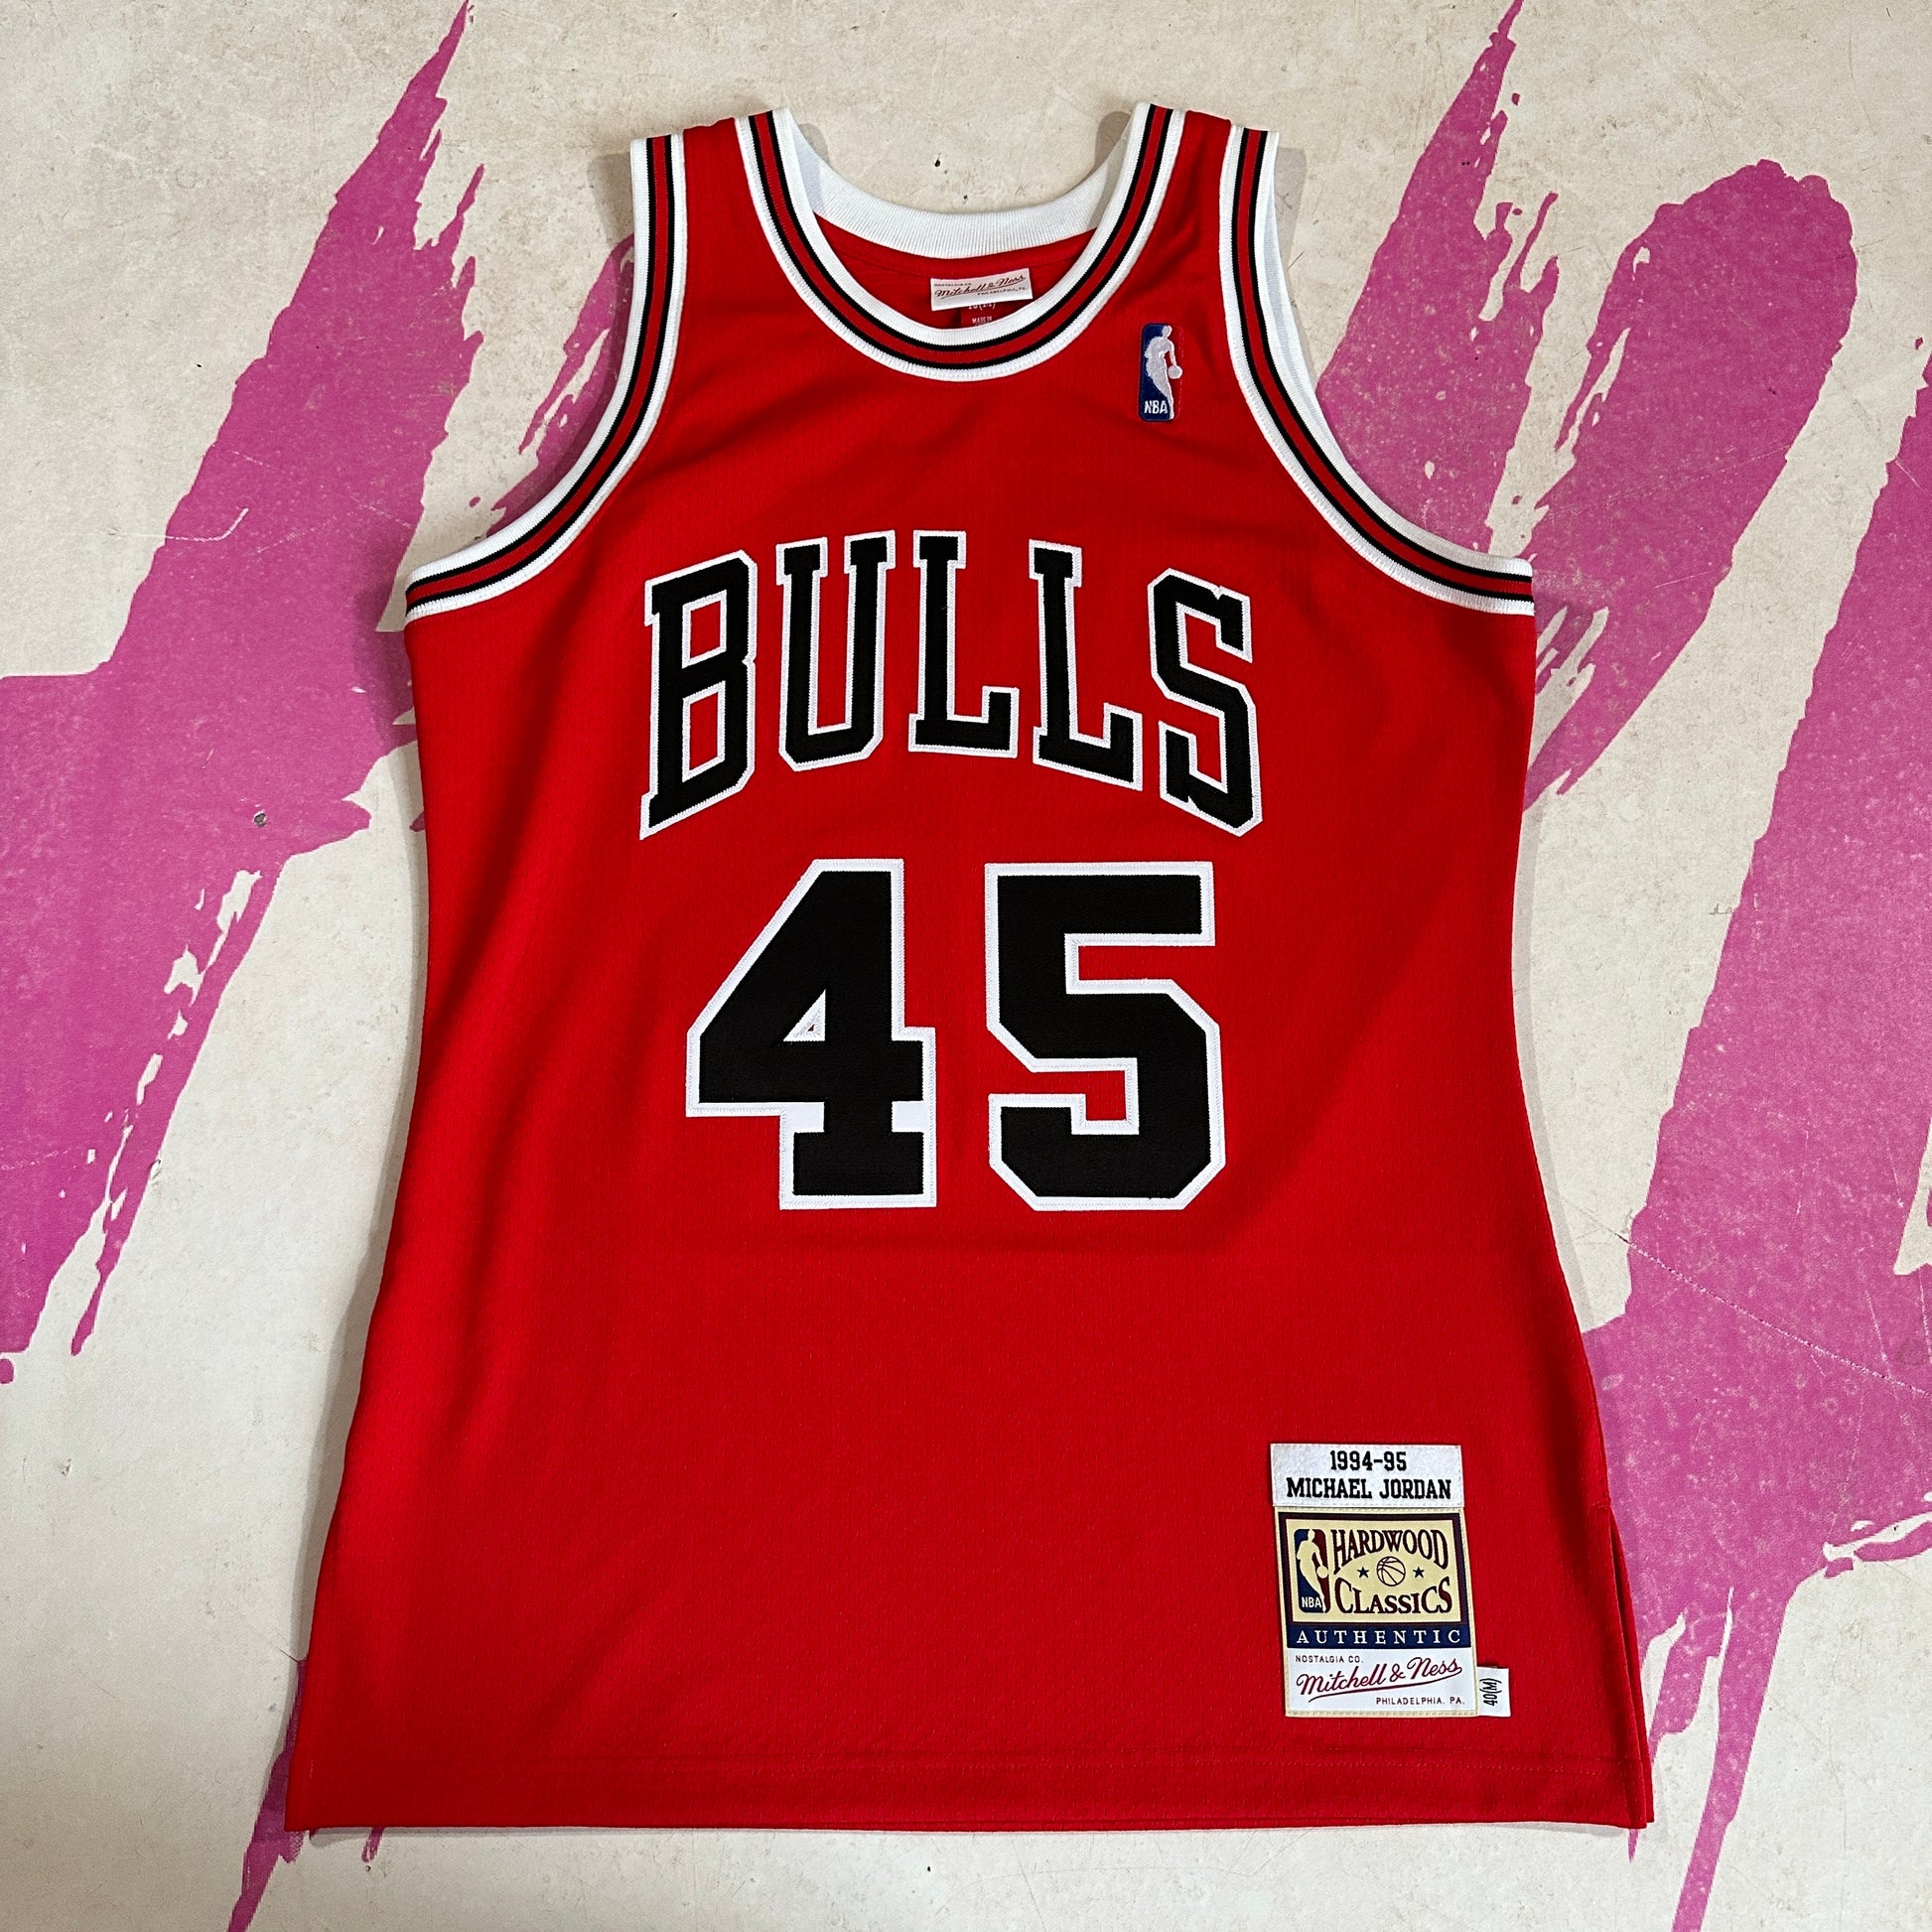 MITCHELL & NESS Chicago Bulls Michael Jordan 1994-95 Authentic